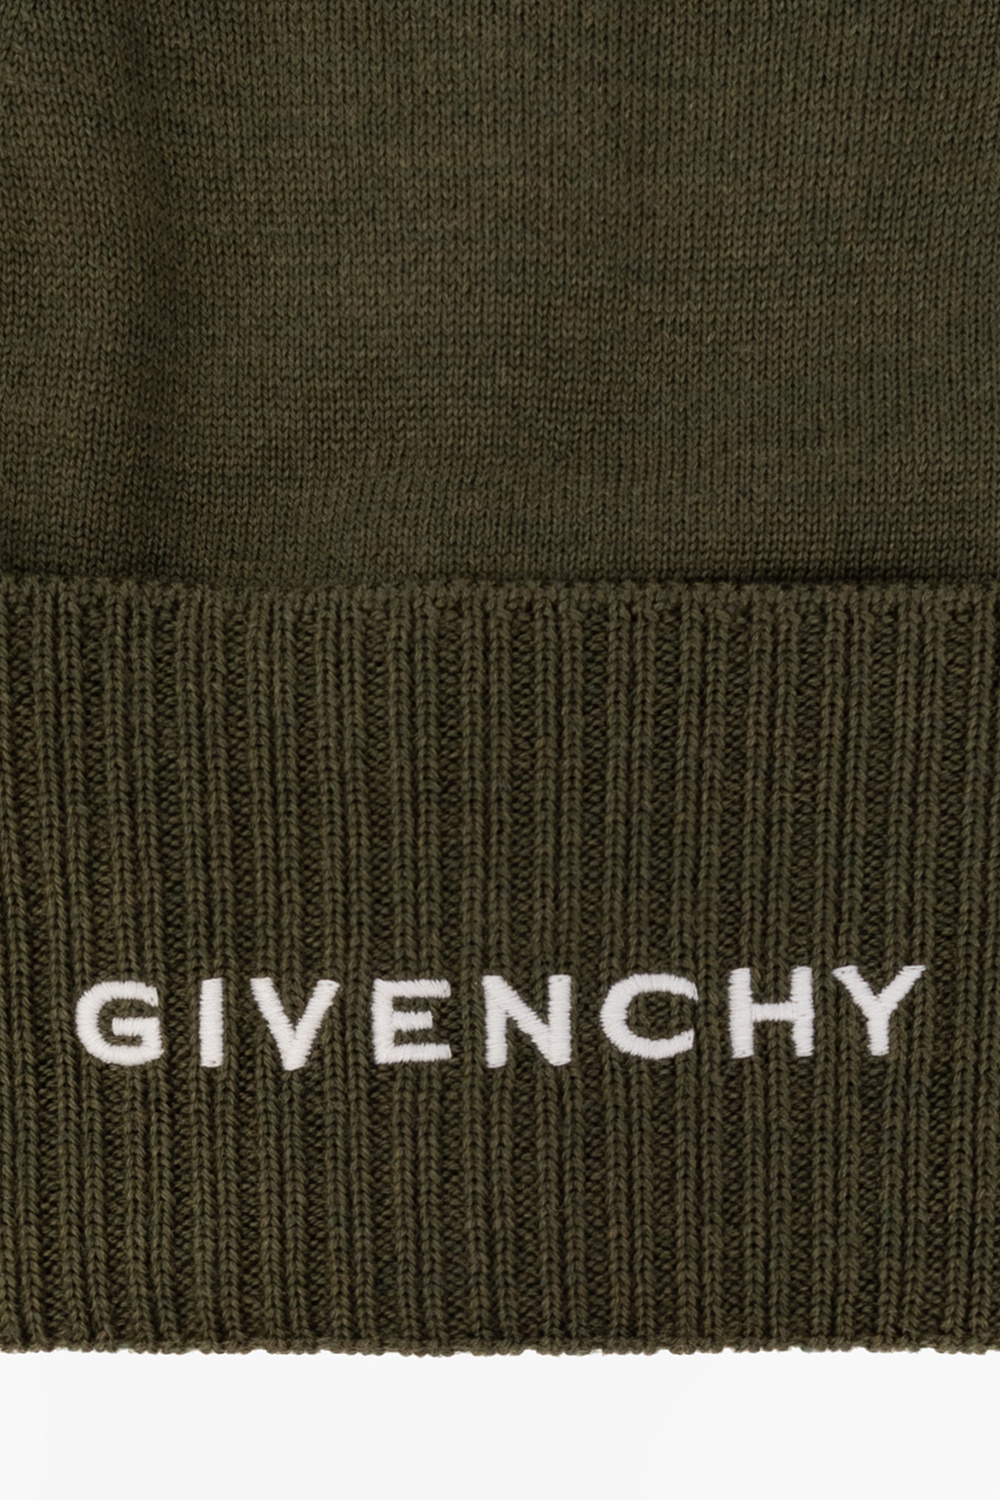 Givenchy Рідкість givenchy organza indecence edp вінтаж раритет